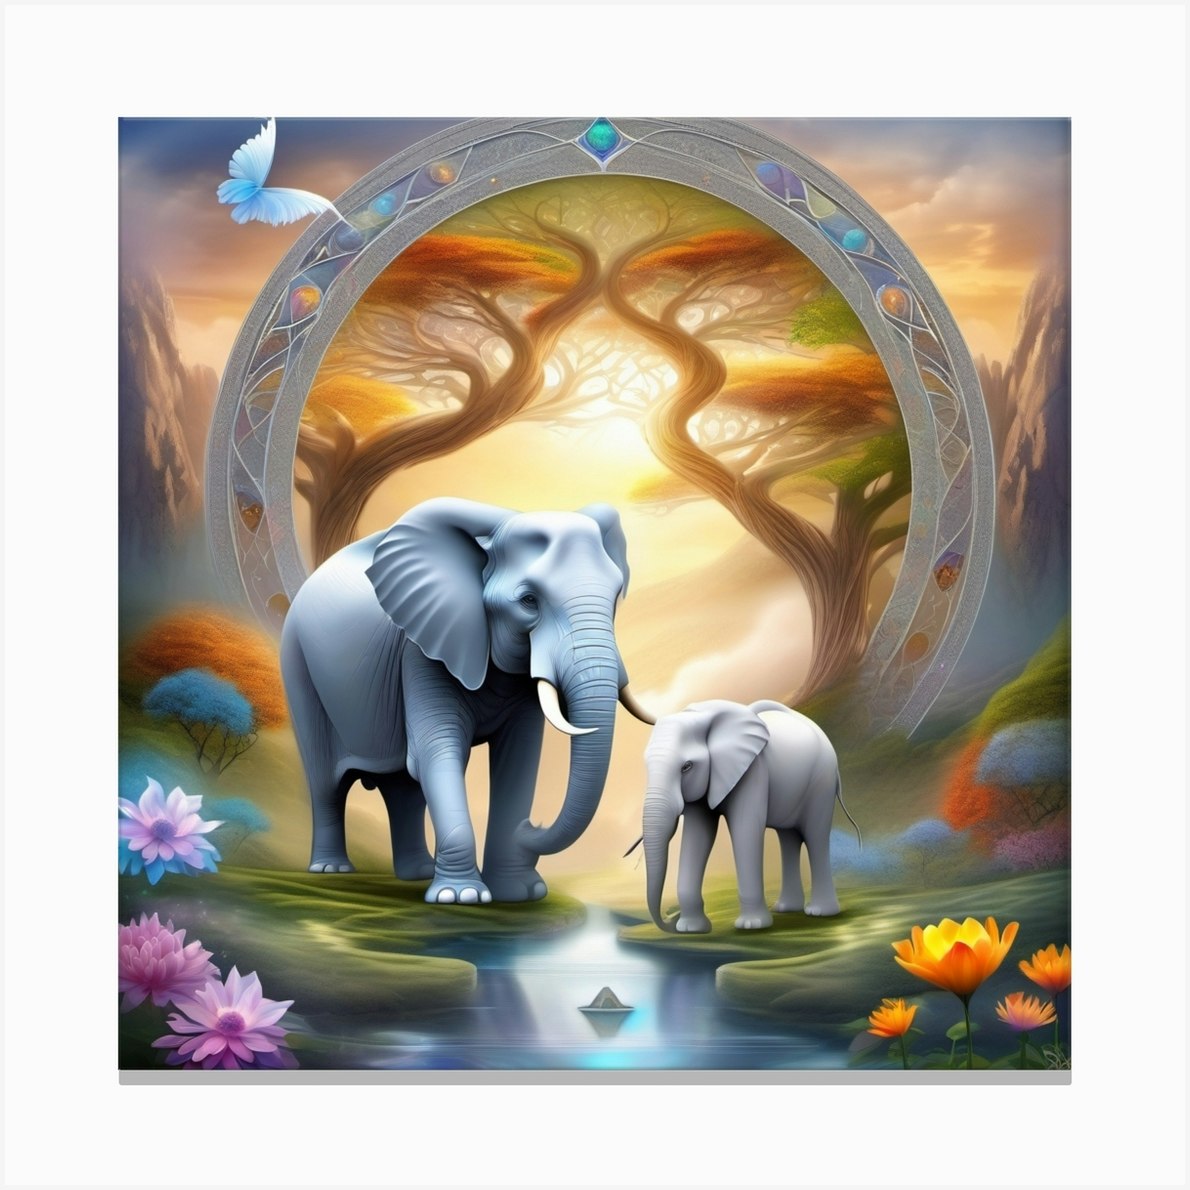 Elephant Gifts for Women 44 Beautiful Elephants Designs with Mandalas